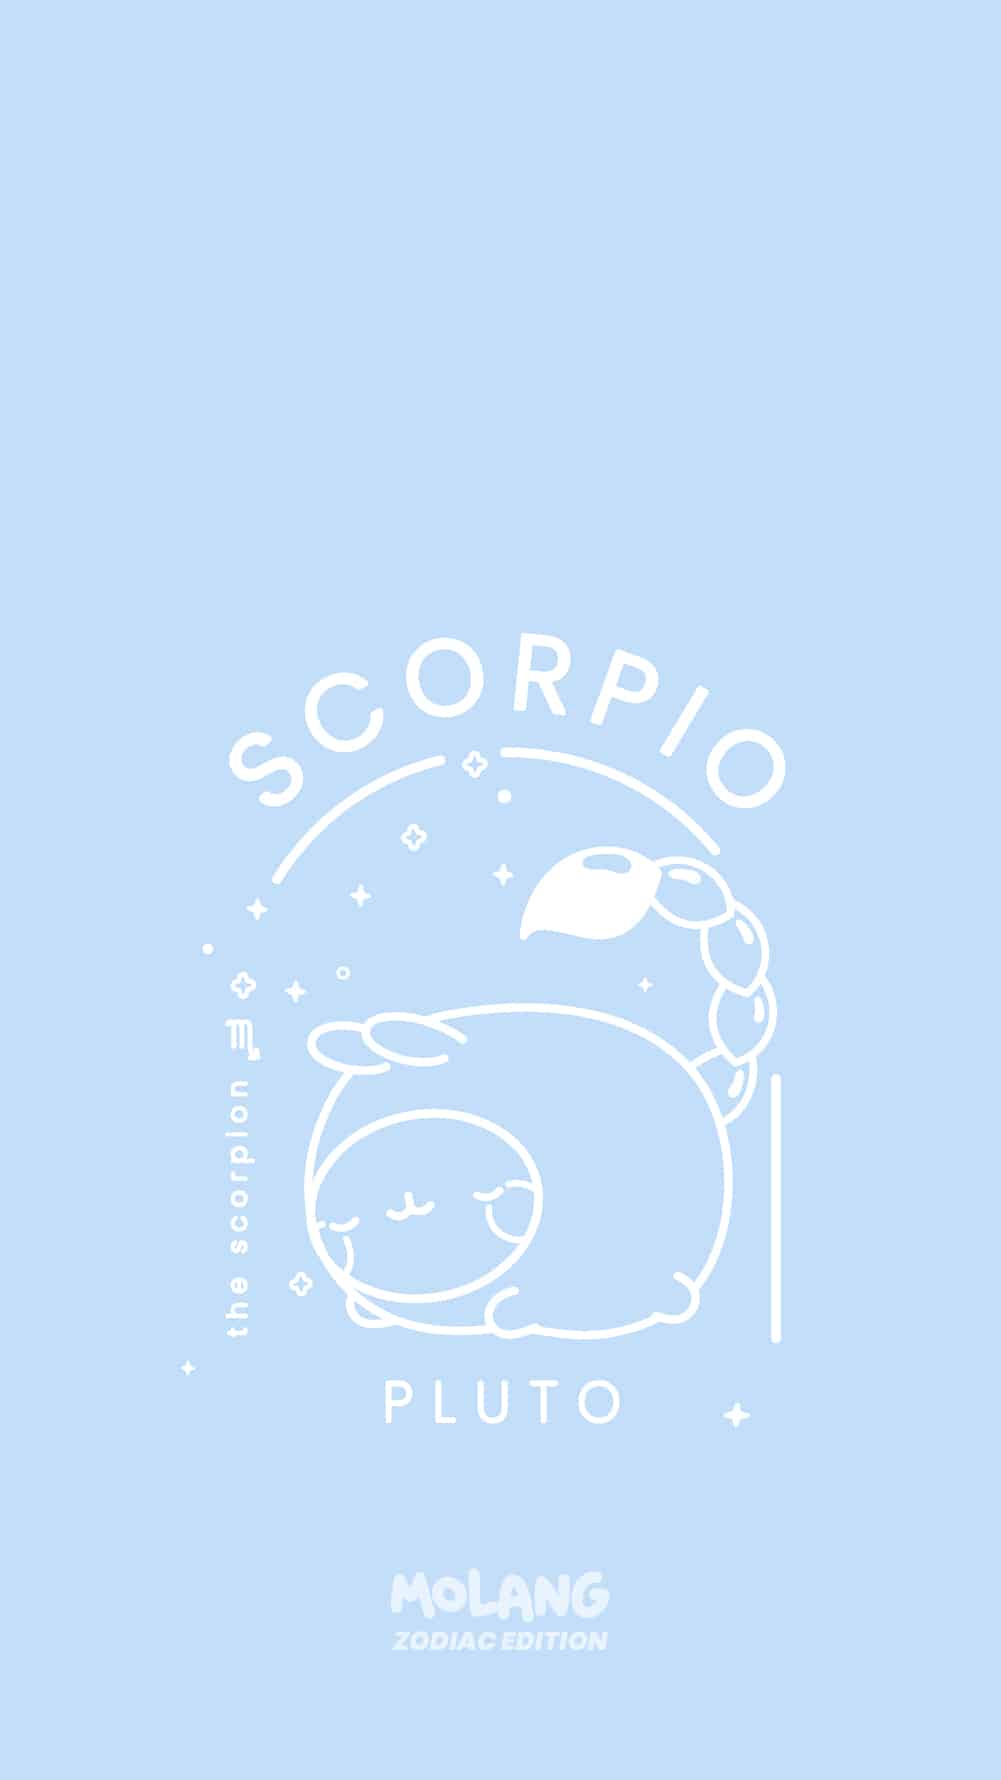 The logo for scorpio pluto - Molang, Scorpio